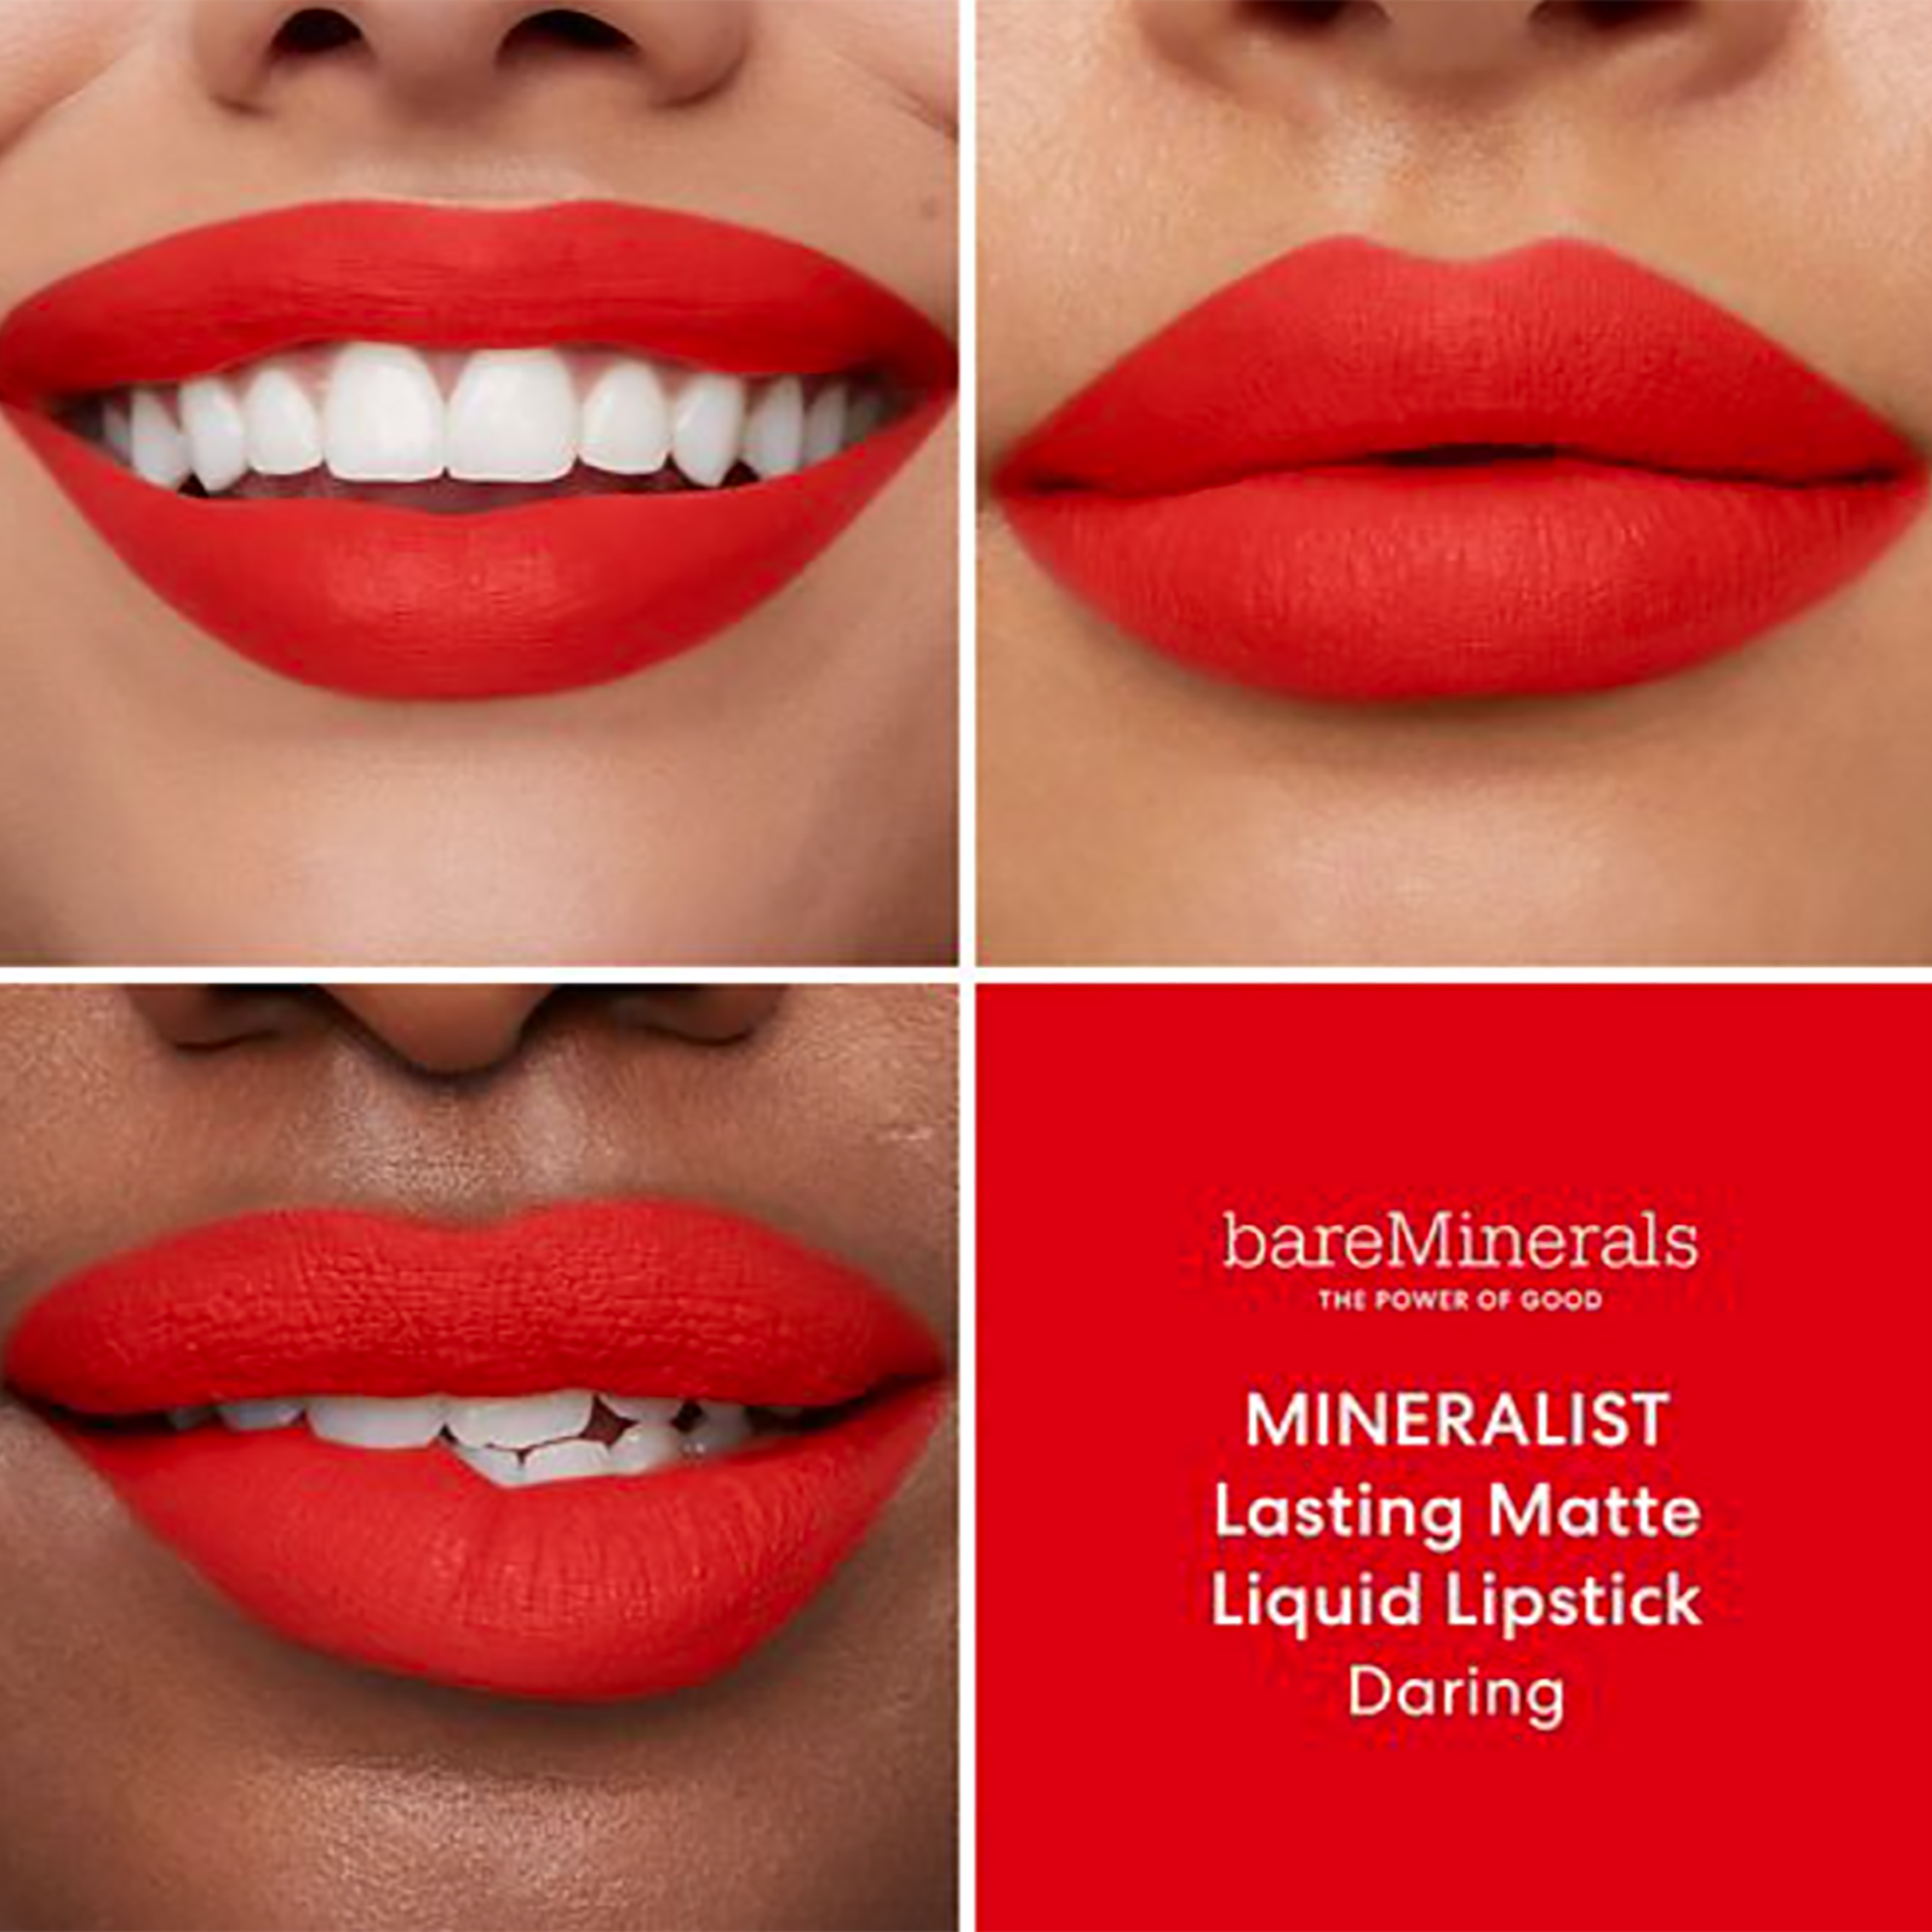 Bare Minerals Mineralist Lasting Matte Liquid Lipstick / DARING